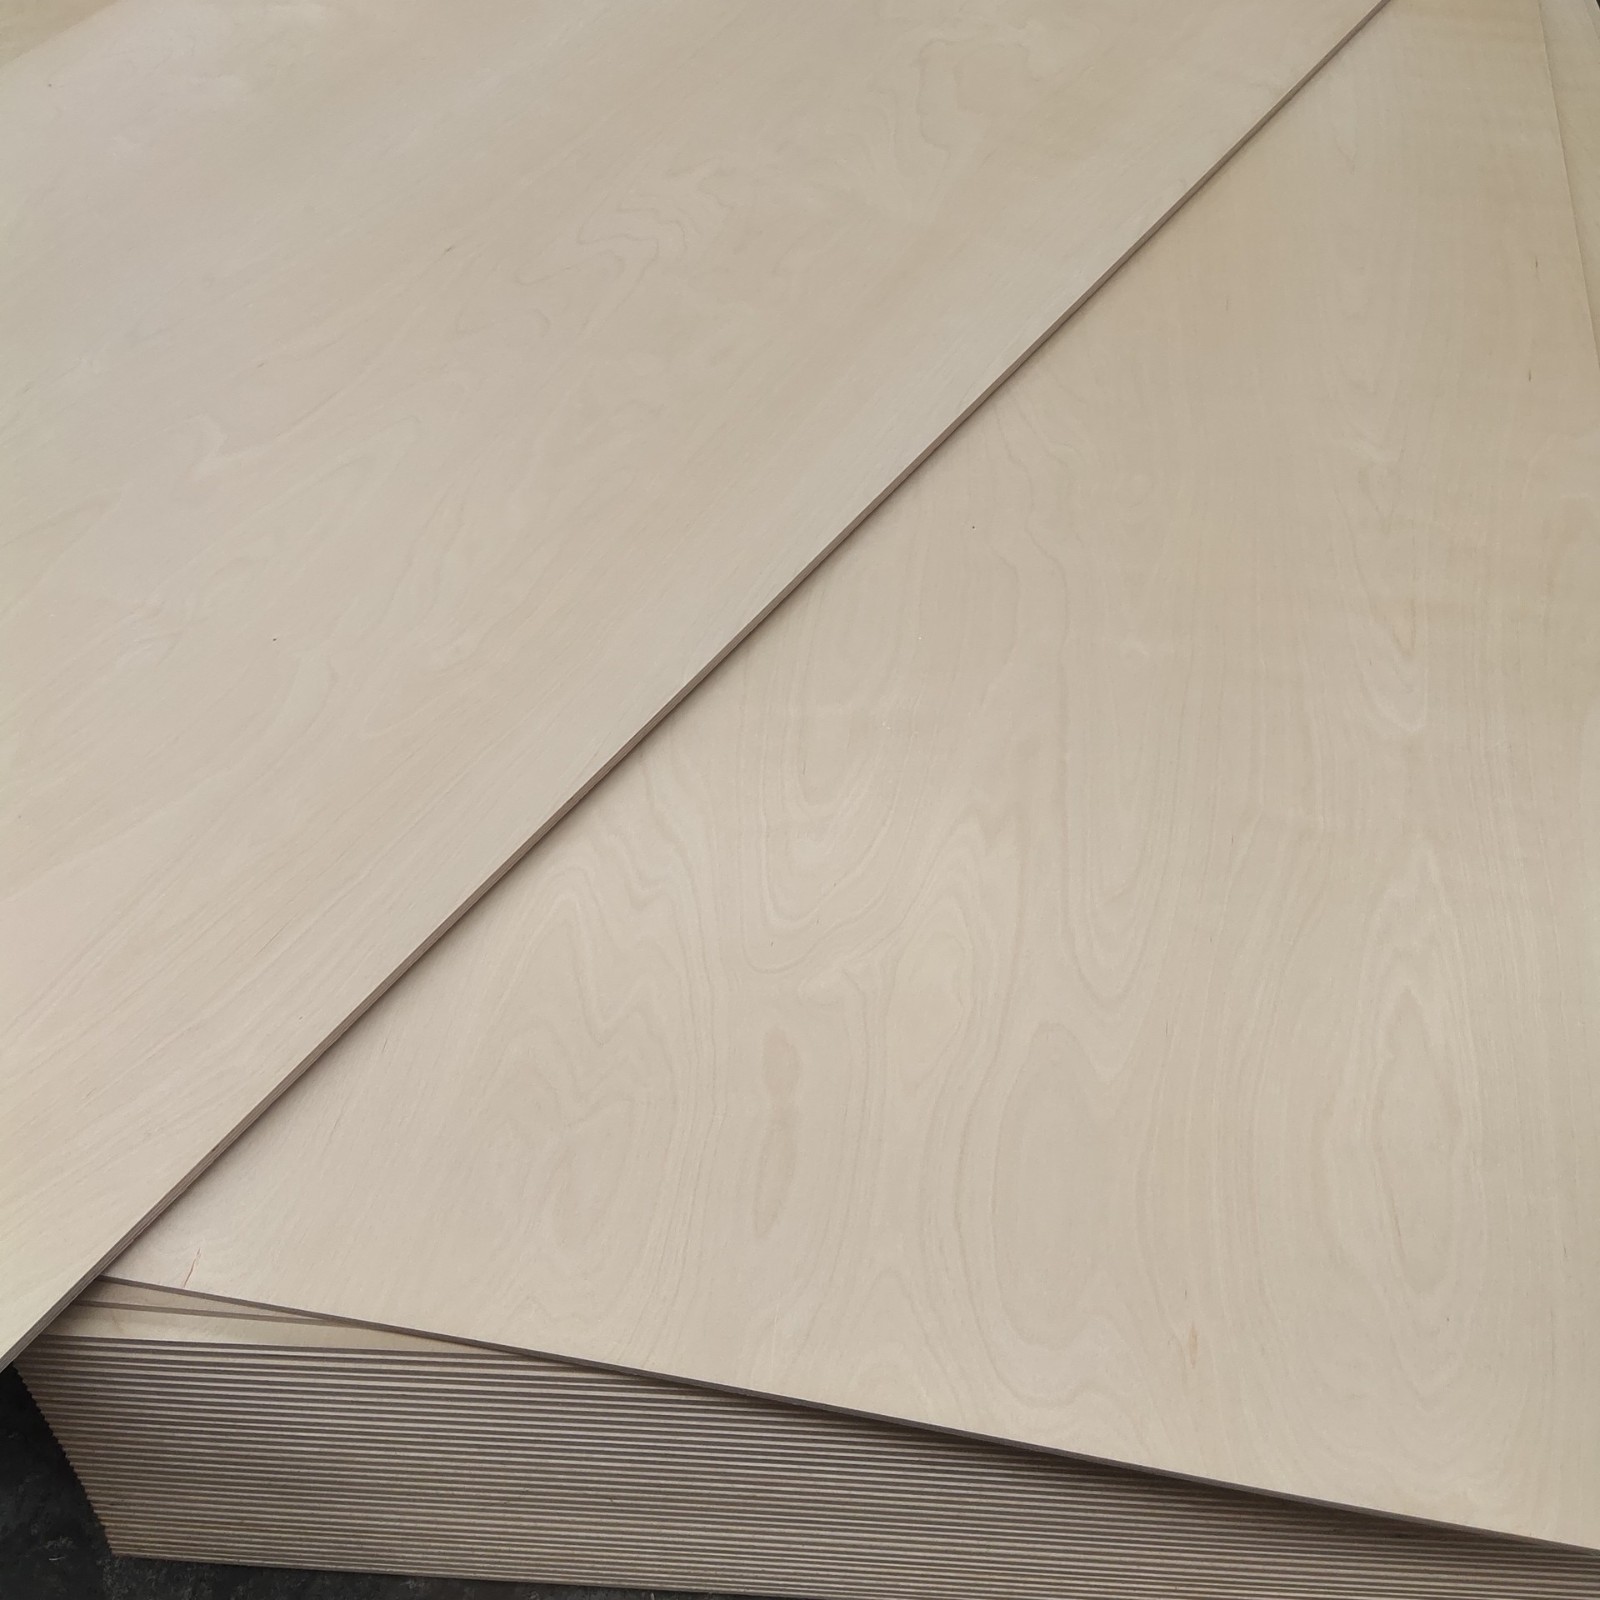 High quality Baltic Birch Plywood